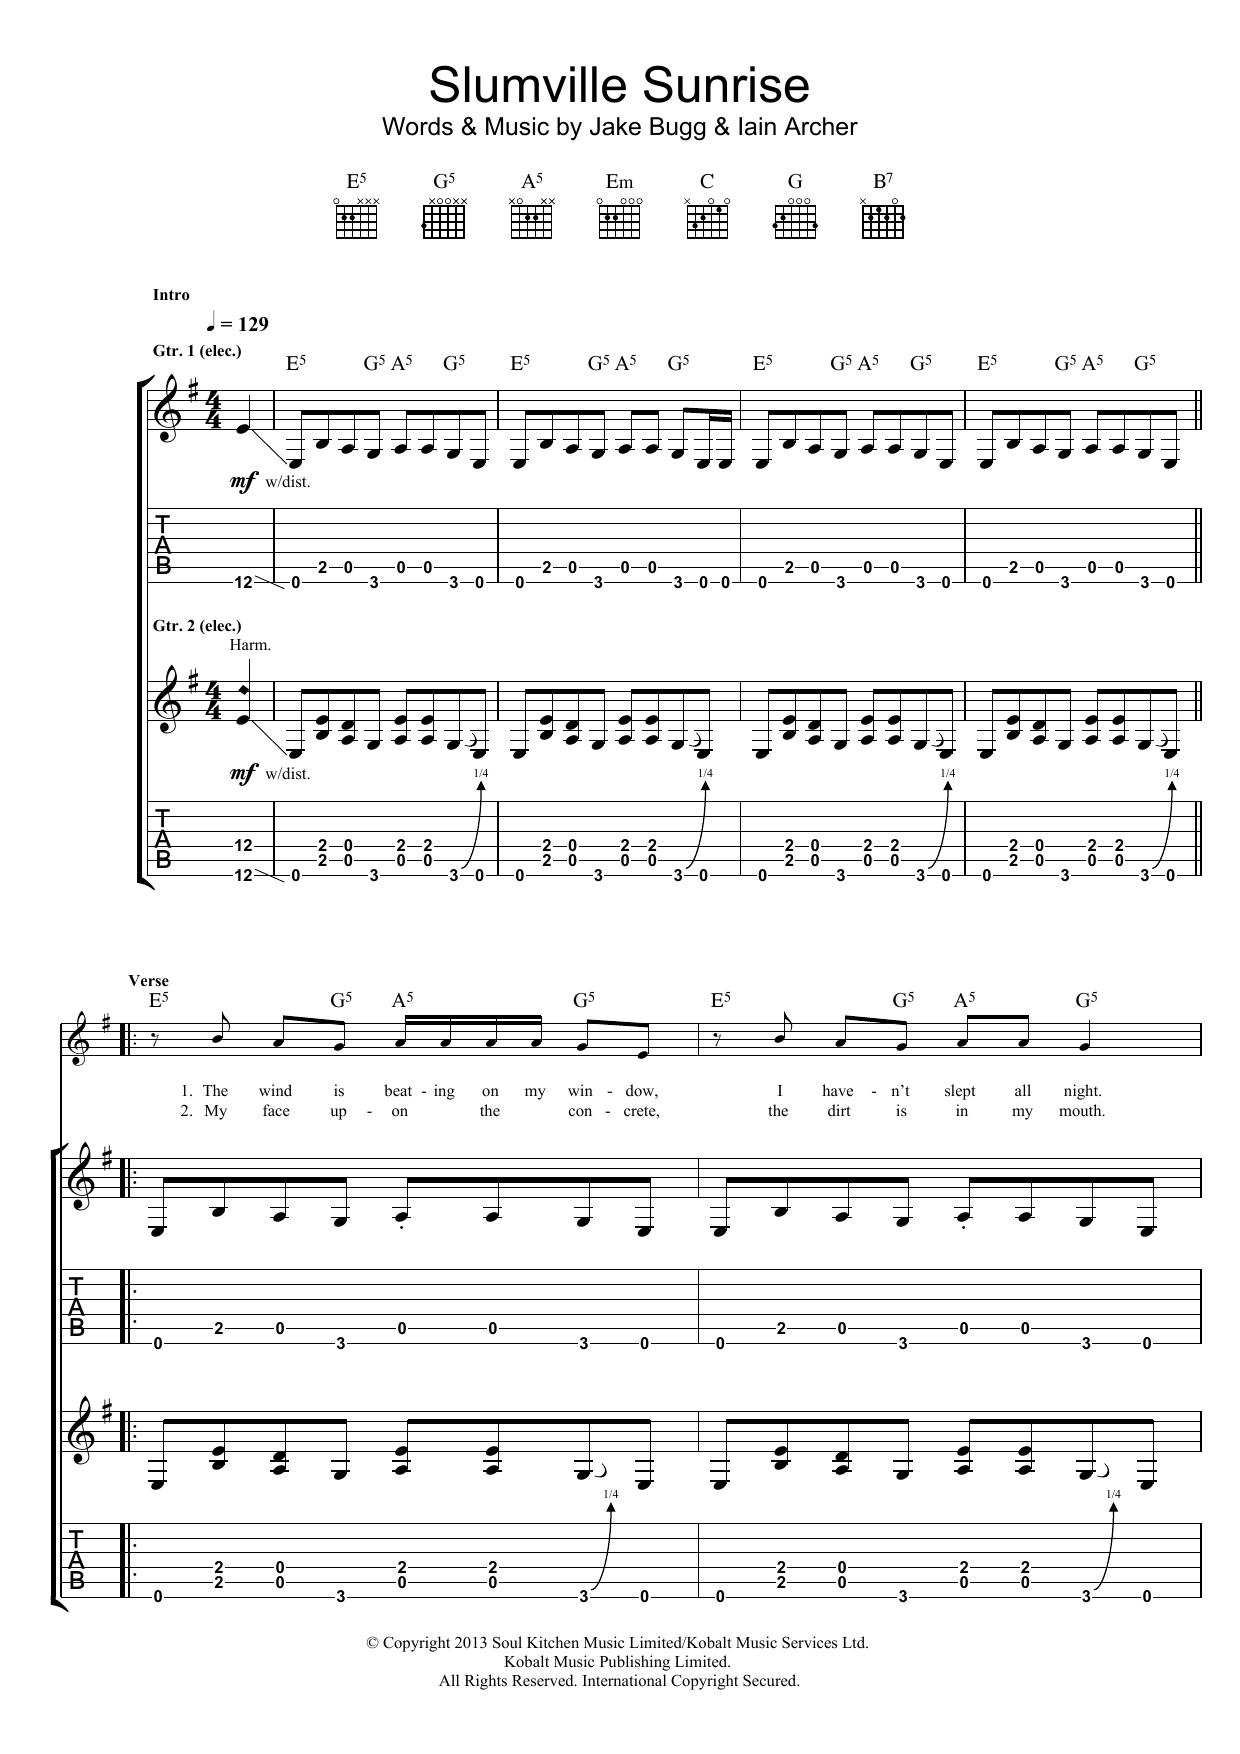 Jake Bugg Slumville Sunrise Sheet Music Notes & Chords for Guitar Tab - Download or Print PDF